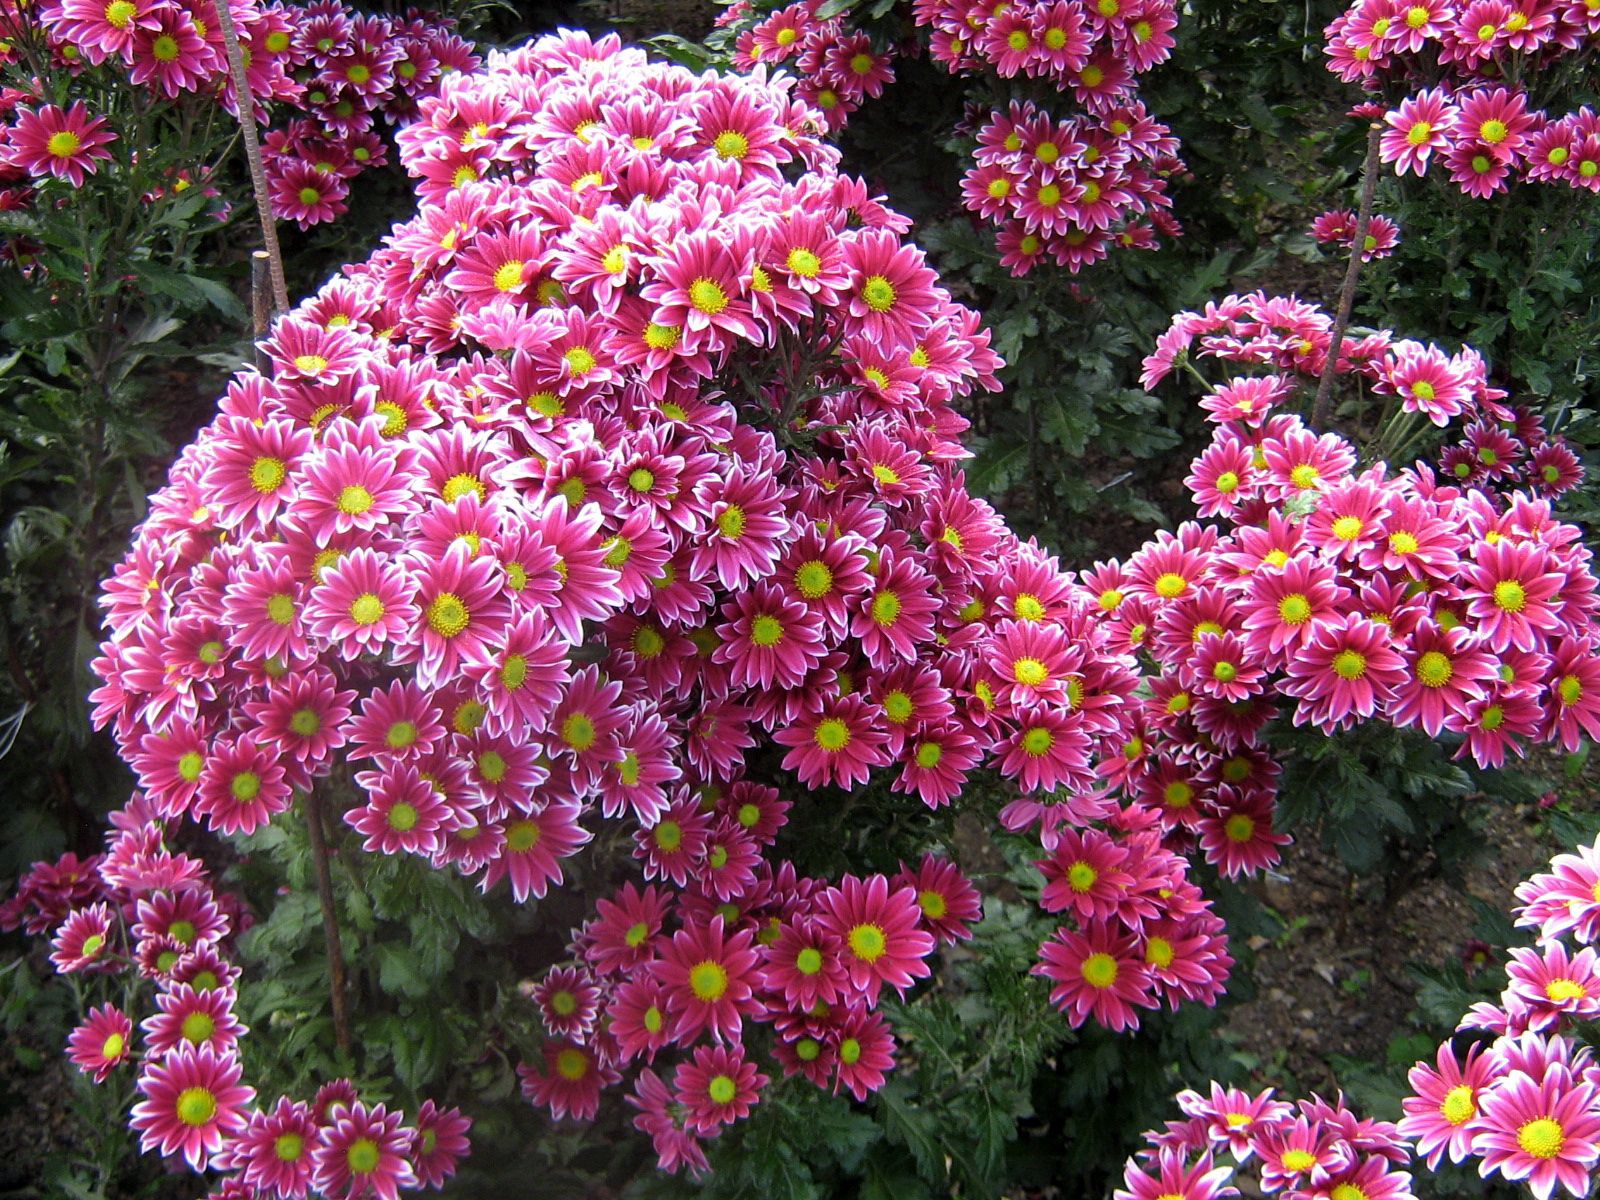 greens, flowers, garden Chrysanthemum Cellphone FHD pic